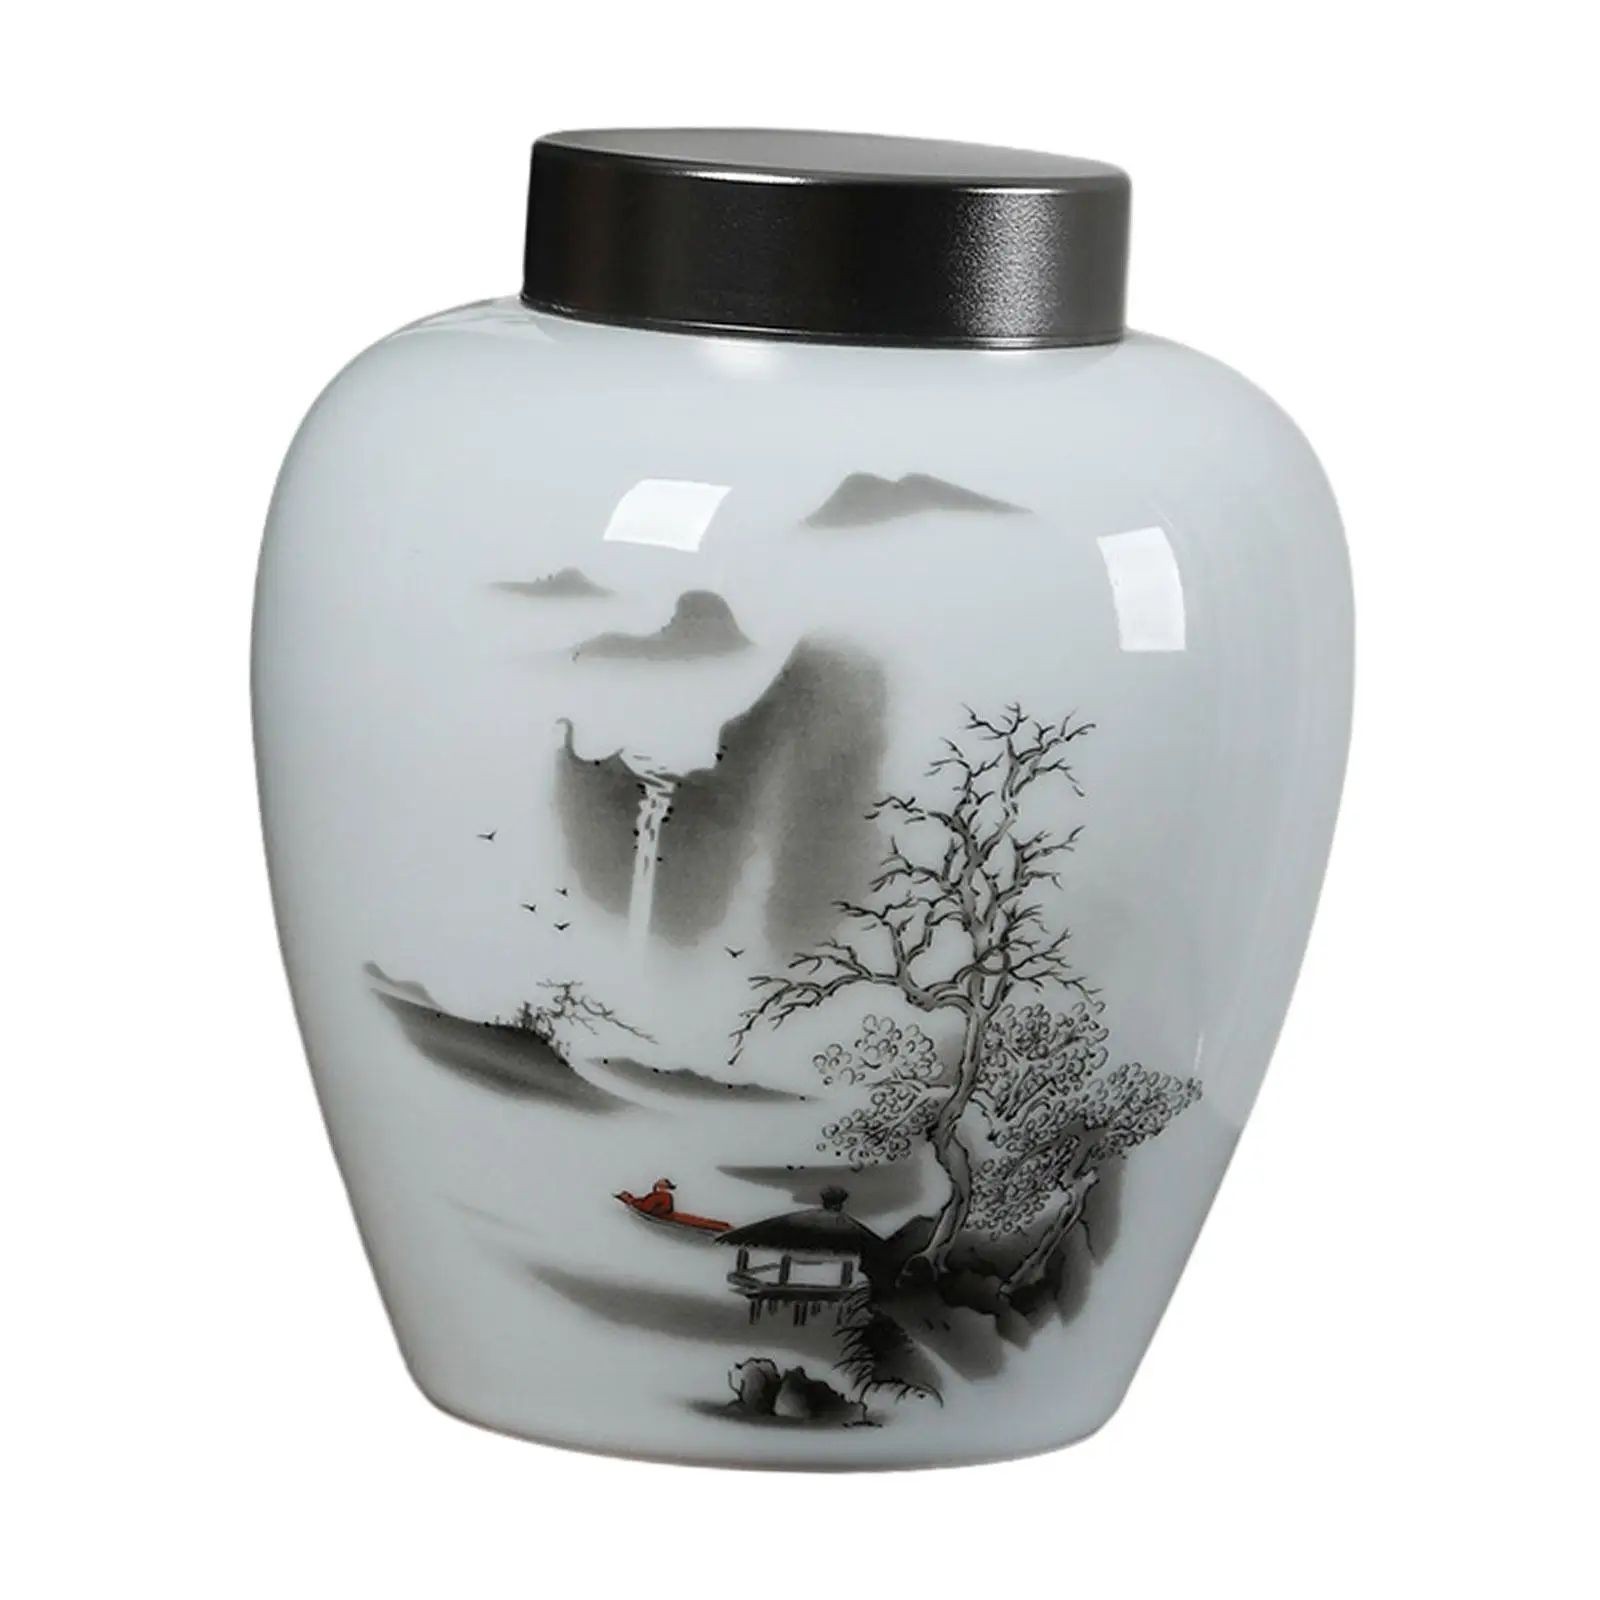 Ceramic Ginger Jar Chinese Flower Display Organizer Porcelain Tea Canister Tea Storage for Home Bedroom Table Office Decor